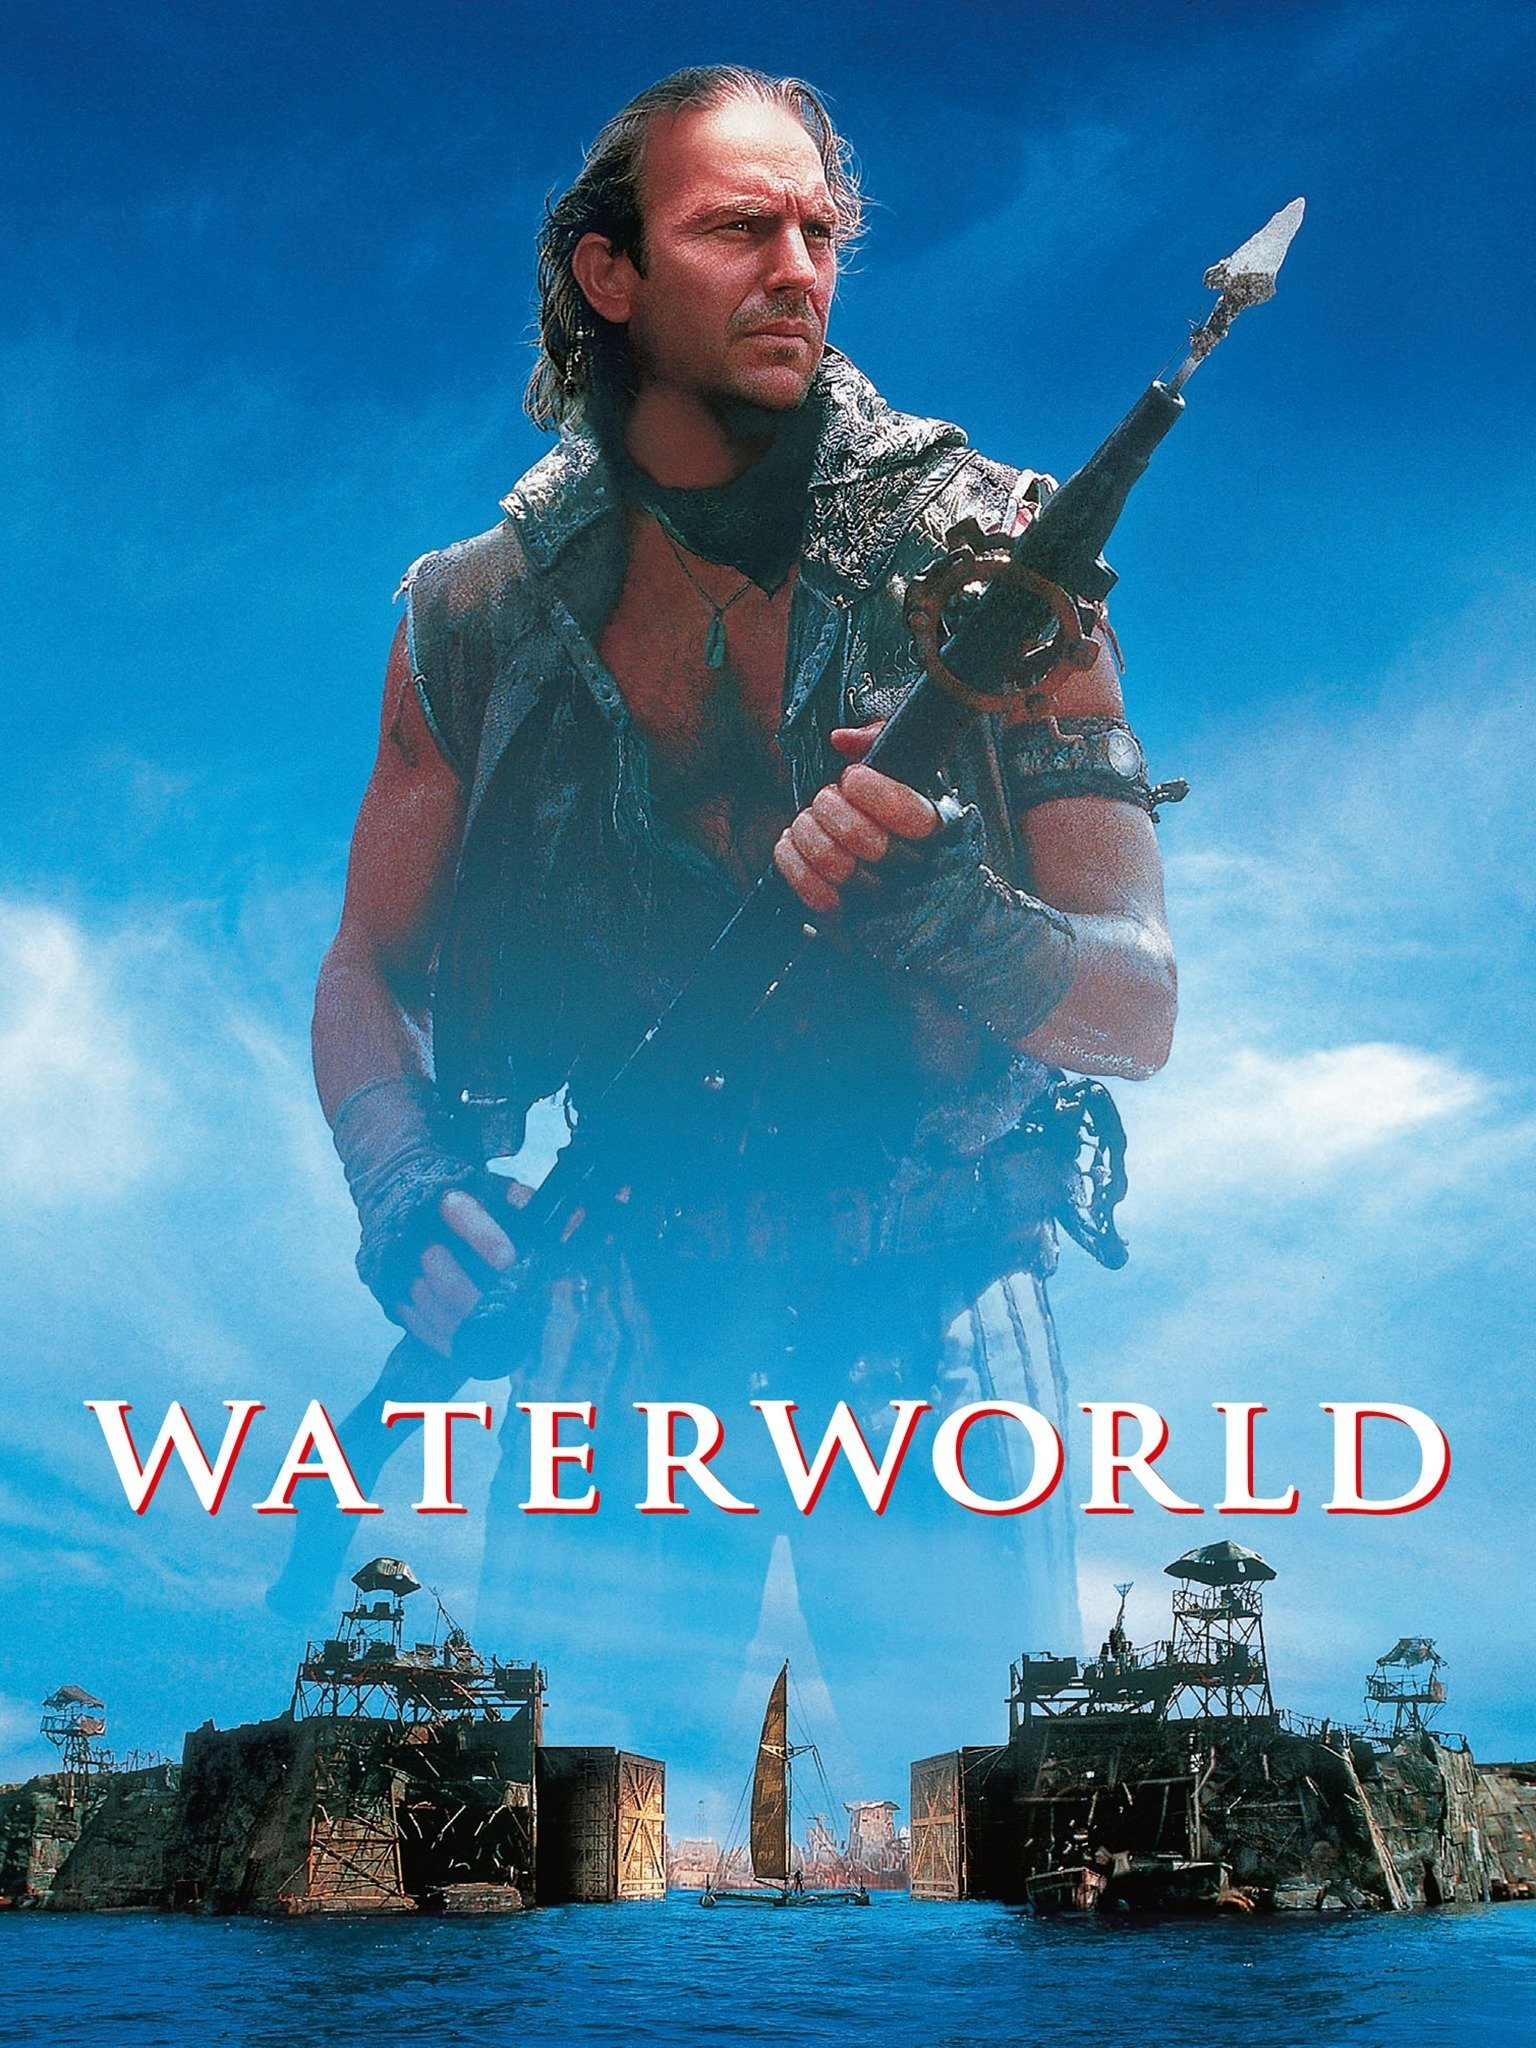 waterworld movie review